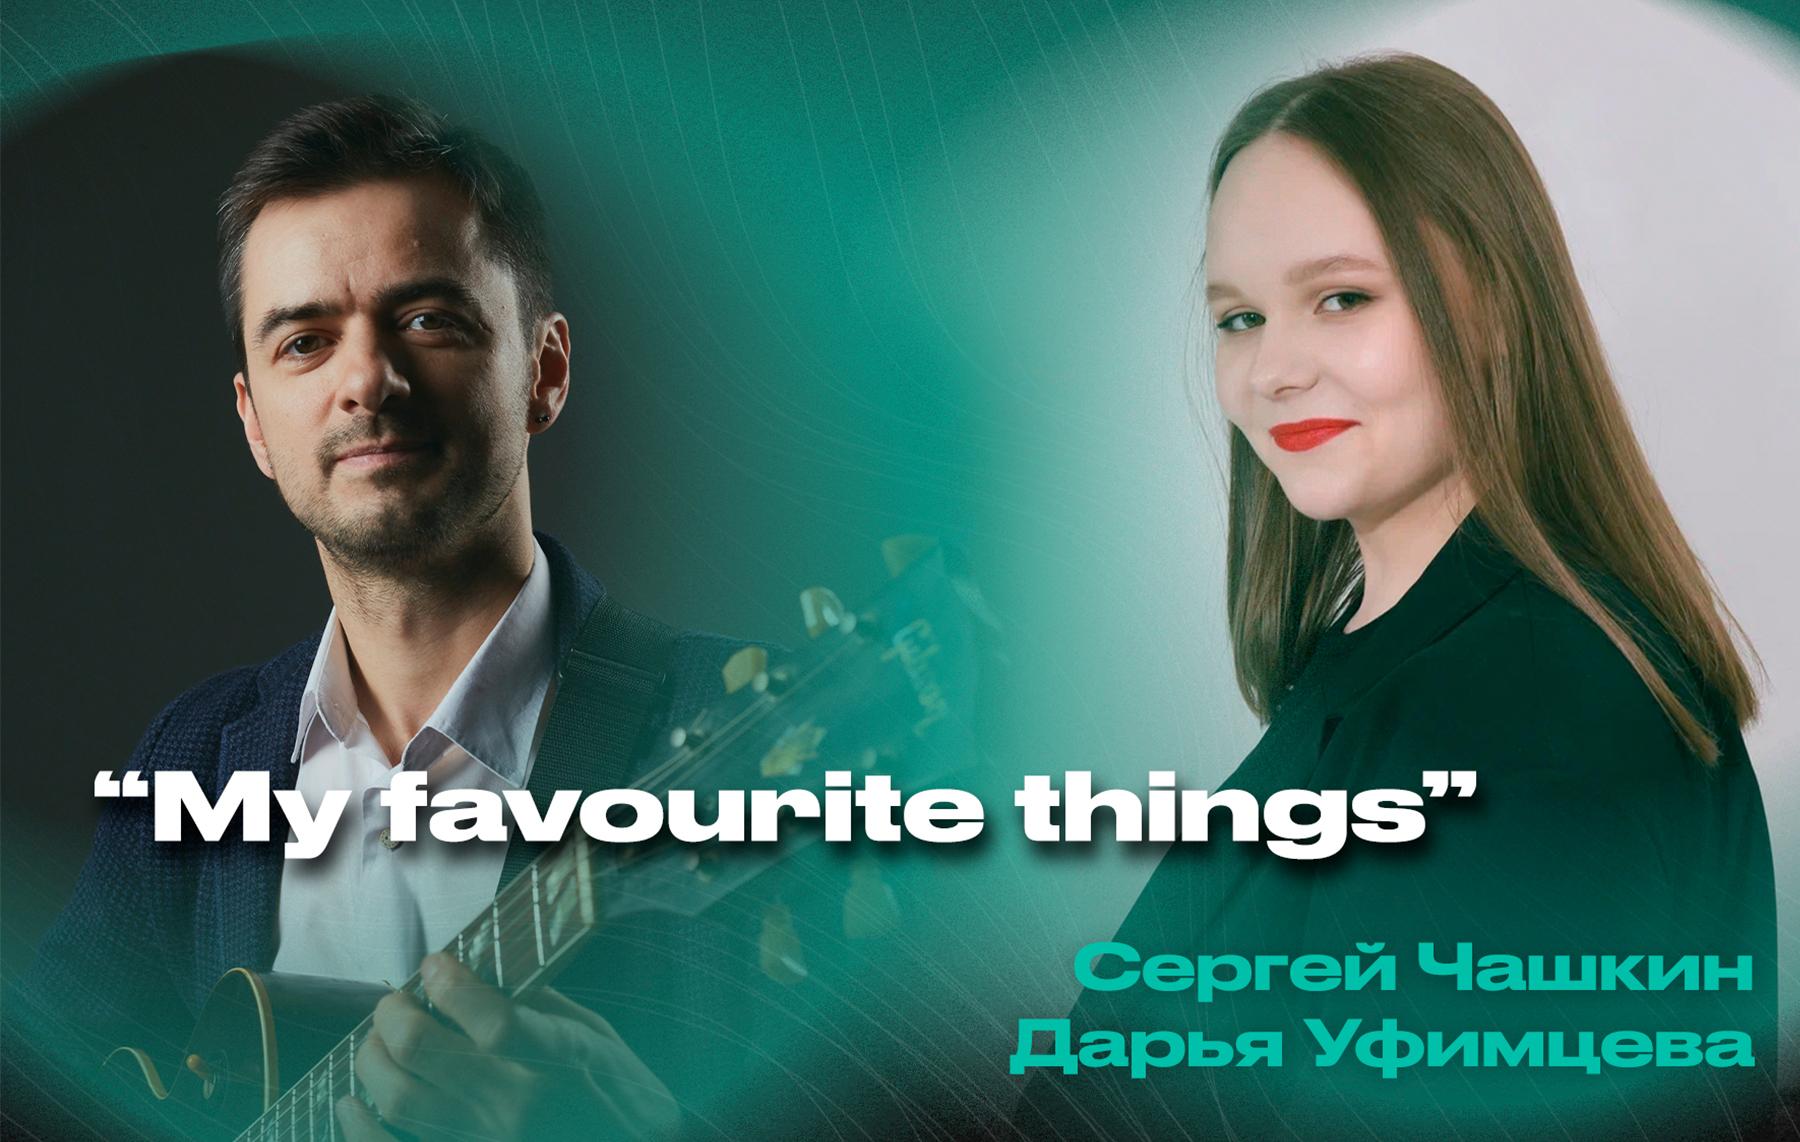 «My favourite things» – Дарья Уфимцева (вокал) и Сергей Чашкин (гитара)